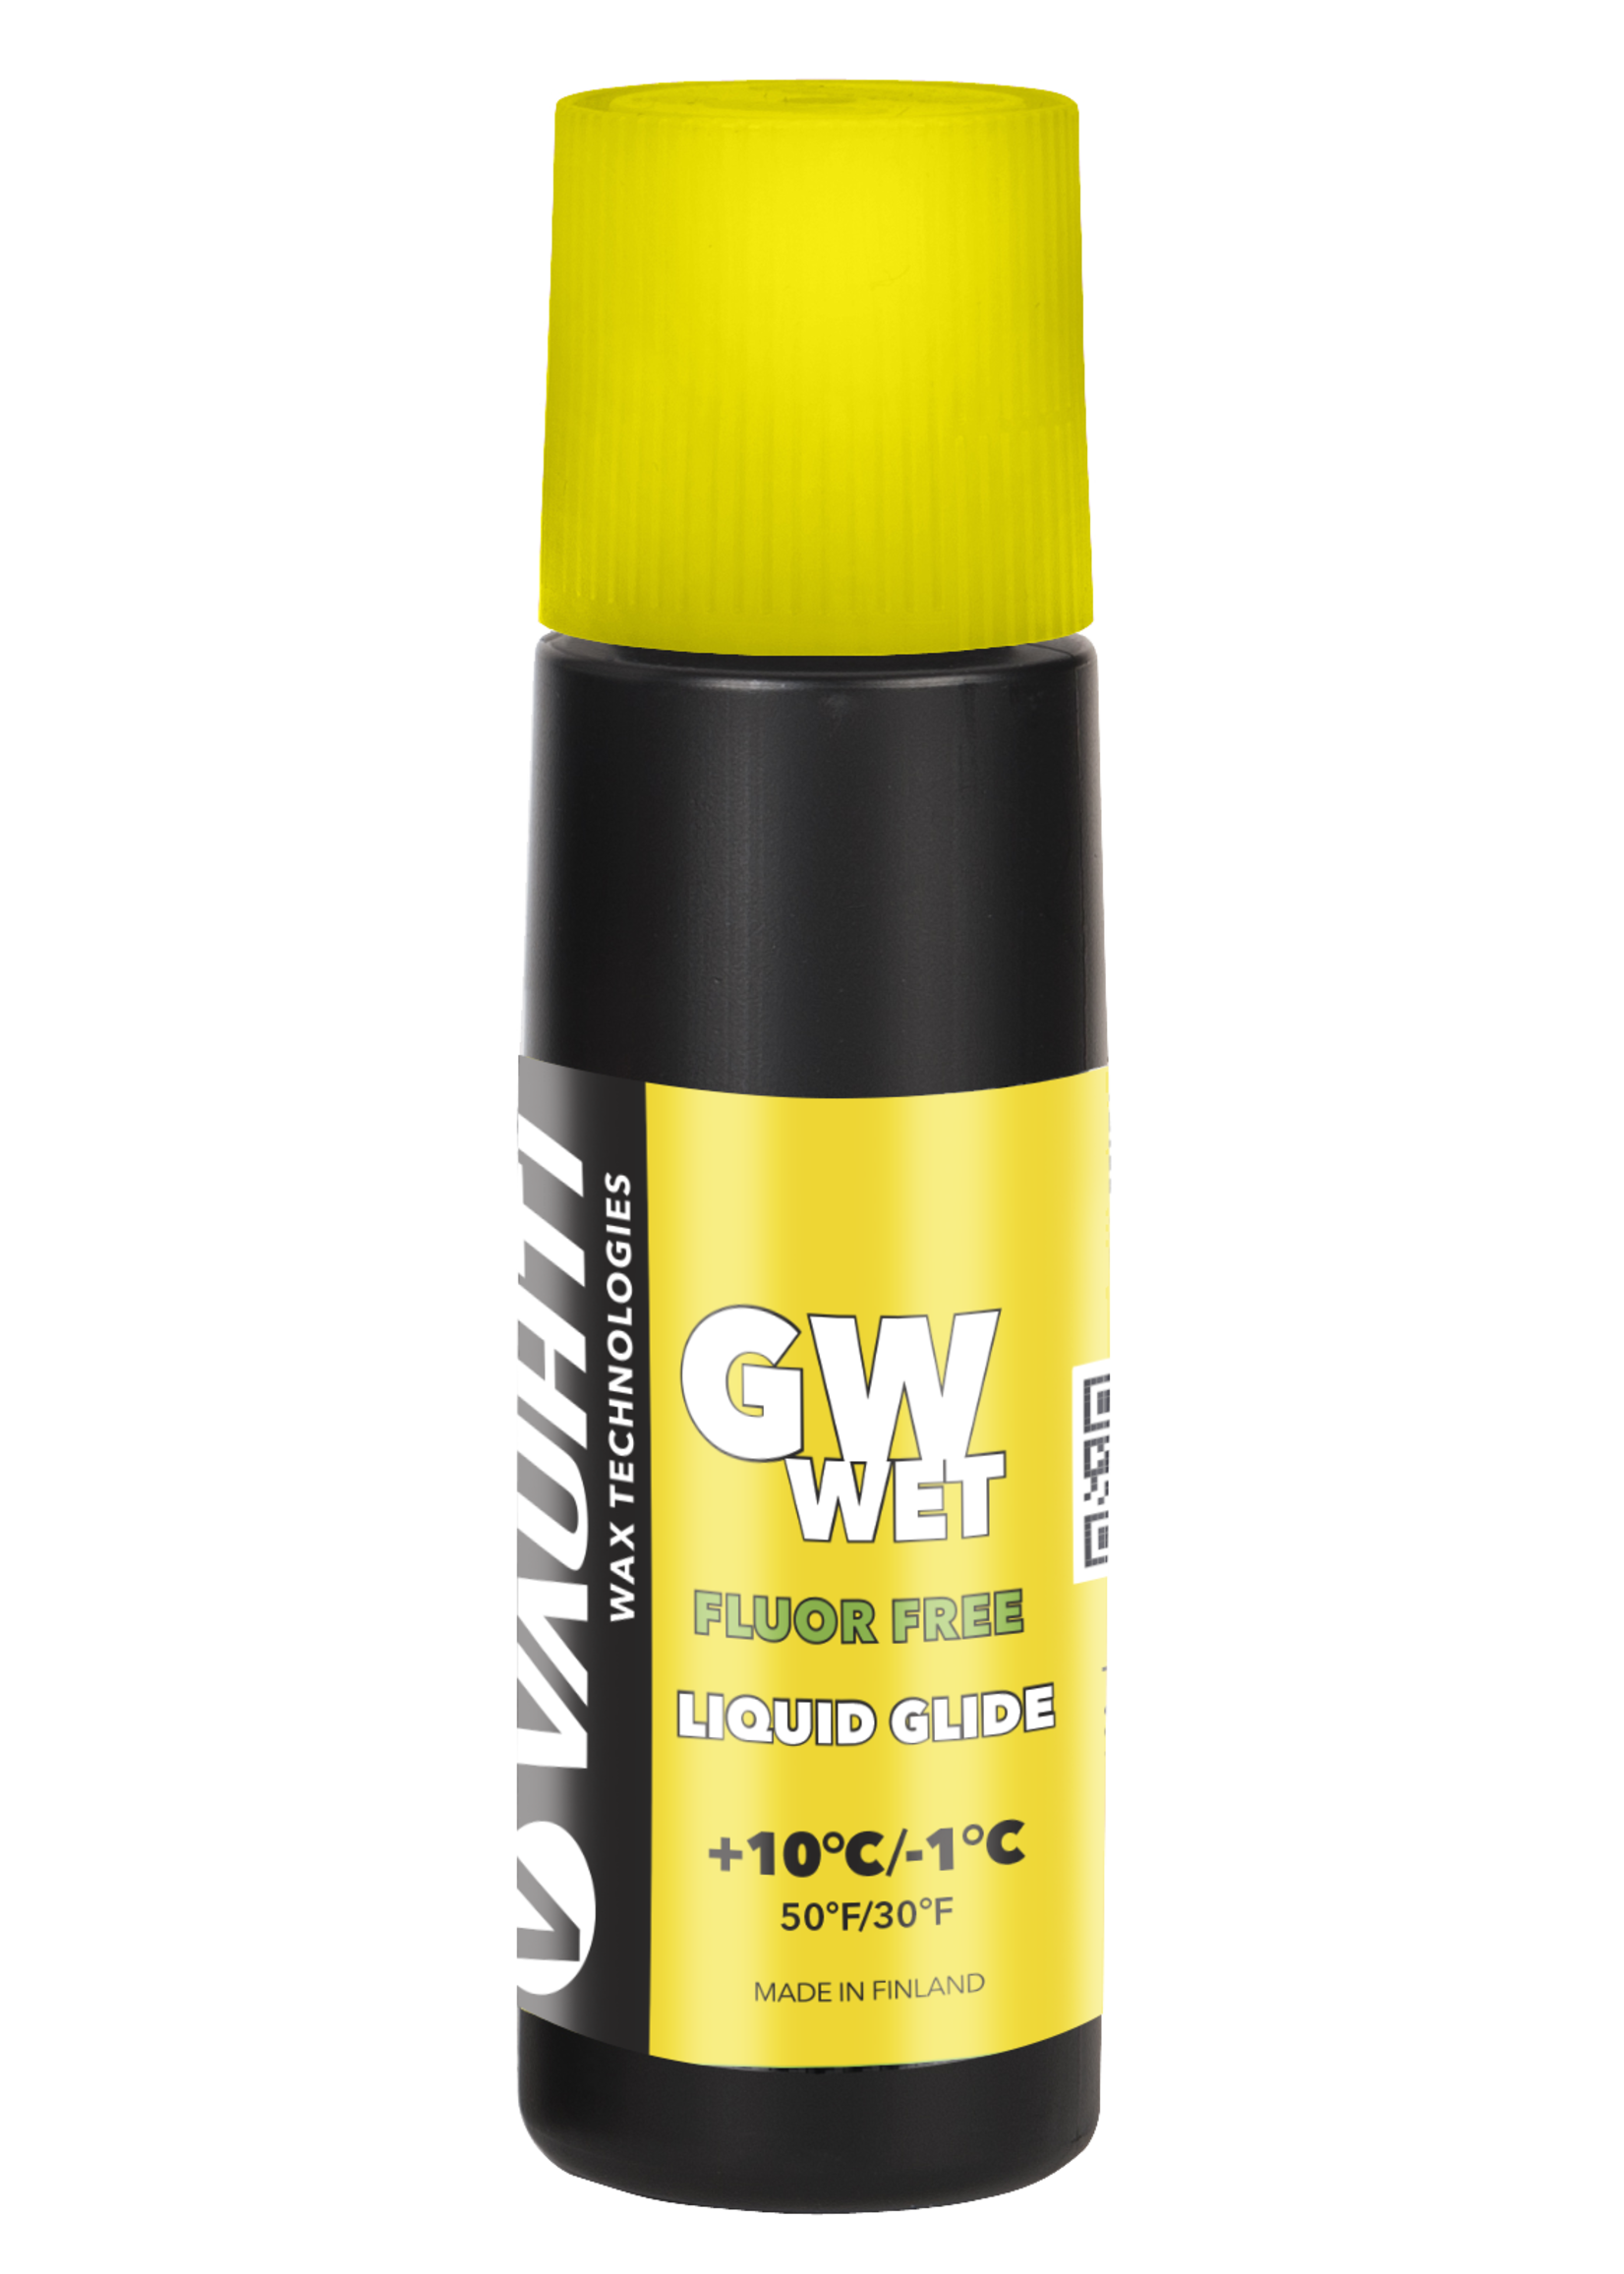 Vauhti Vauhti- Quick Liquid Wax, Yellow/Wet